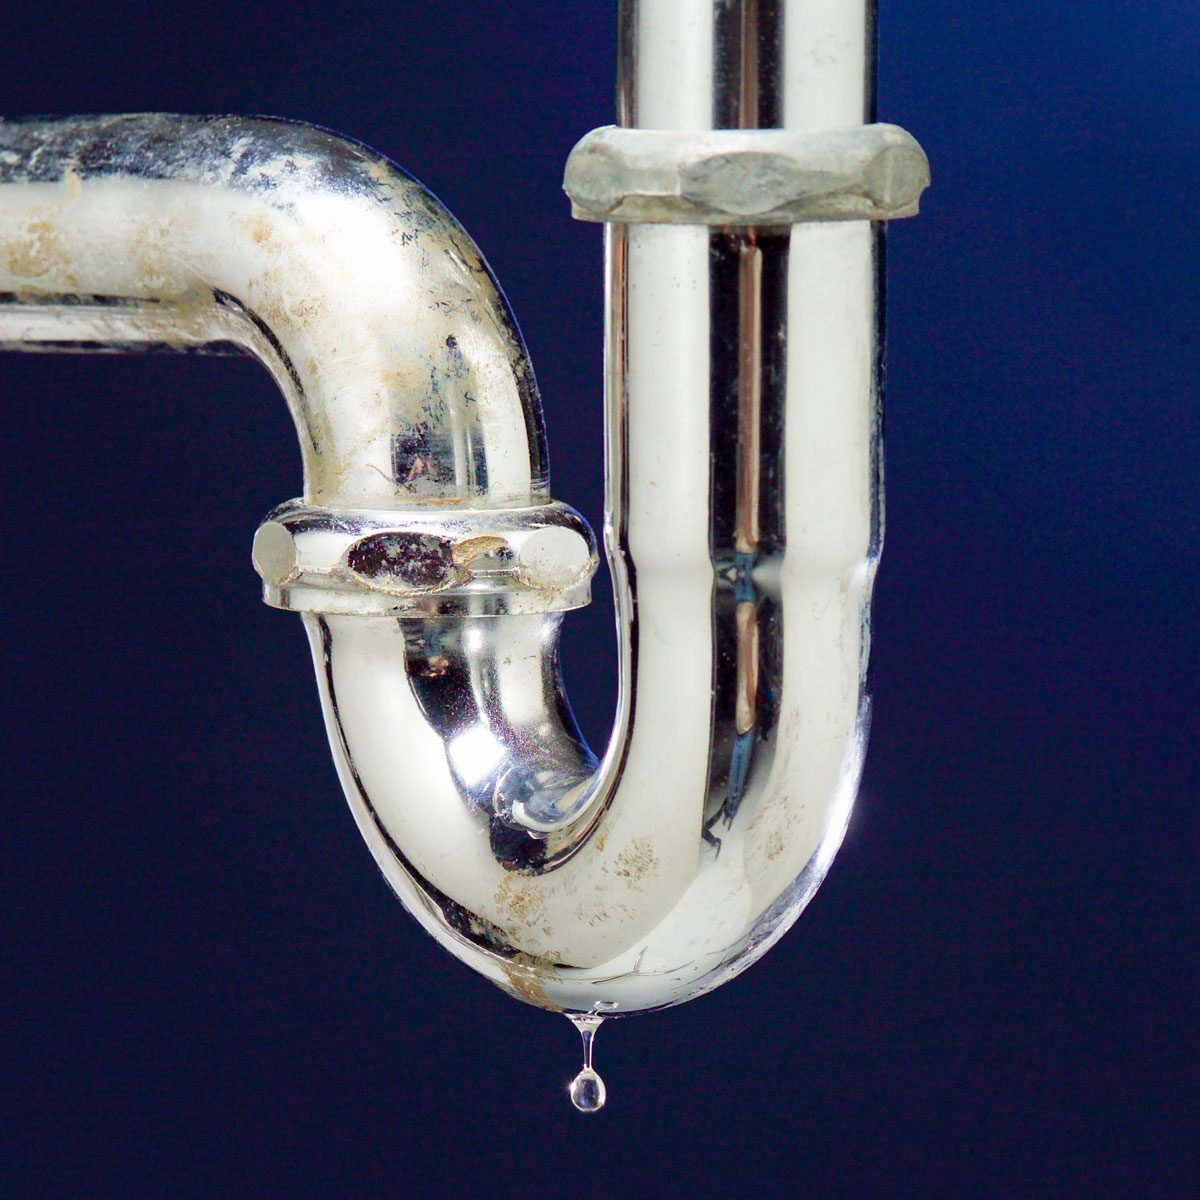 How to Find and Repair Hidden Plumbing Leaks